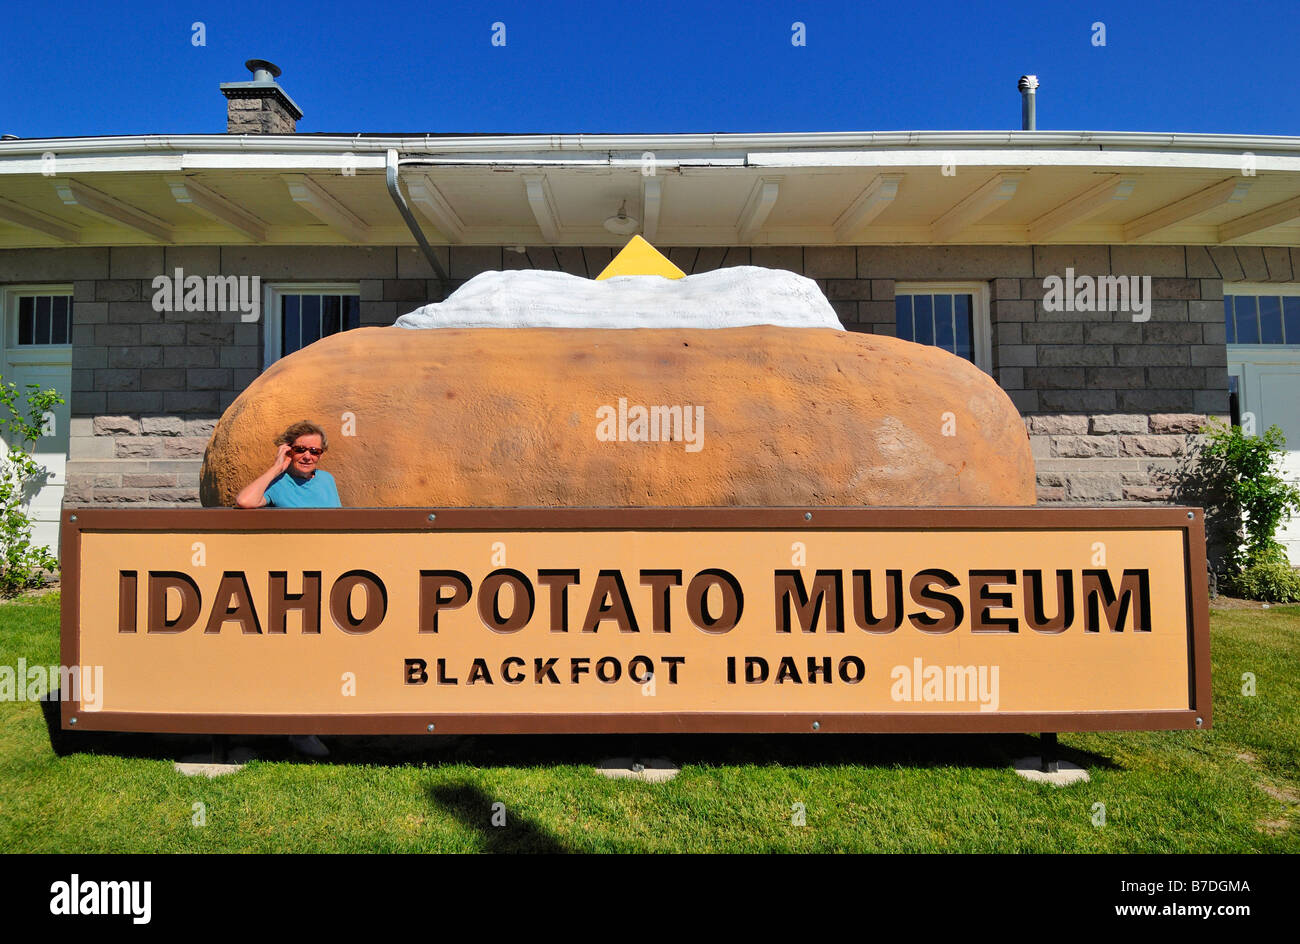 The Idaho Potato Museum at Blackfoot in Idaho, United States of America Stock Photo